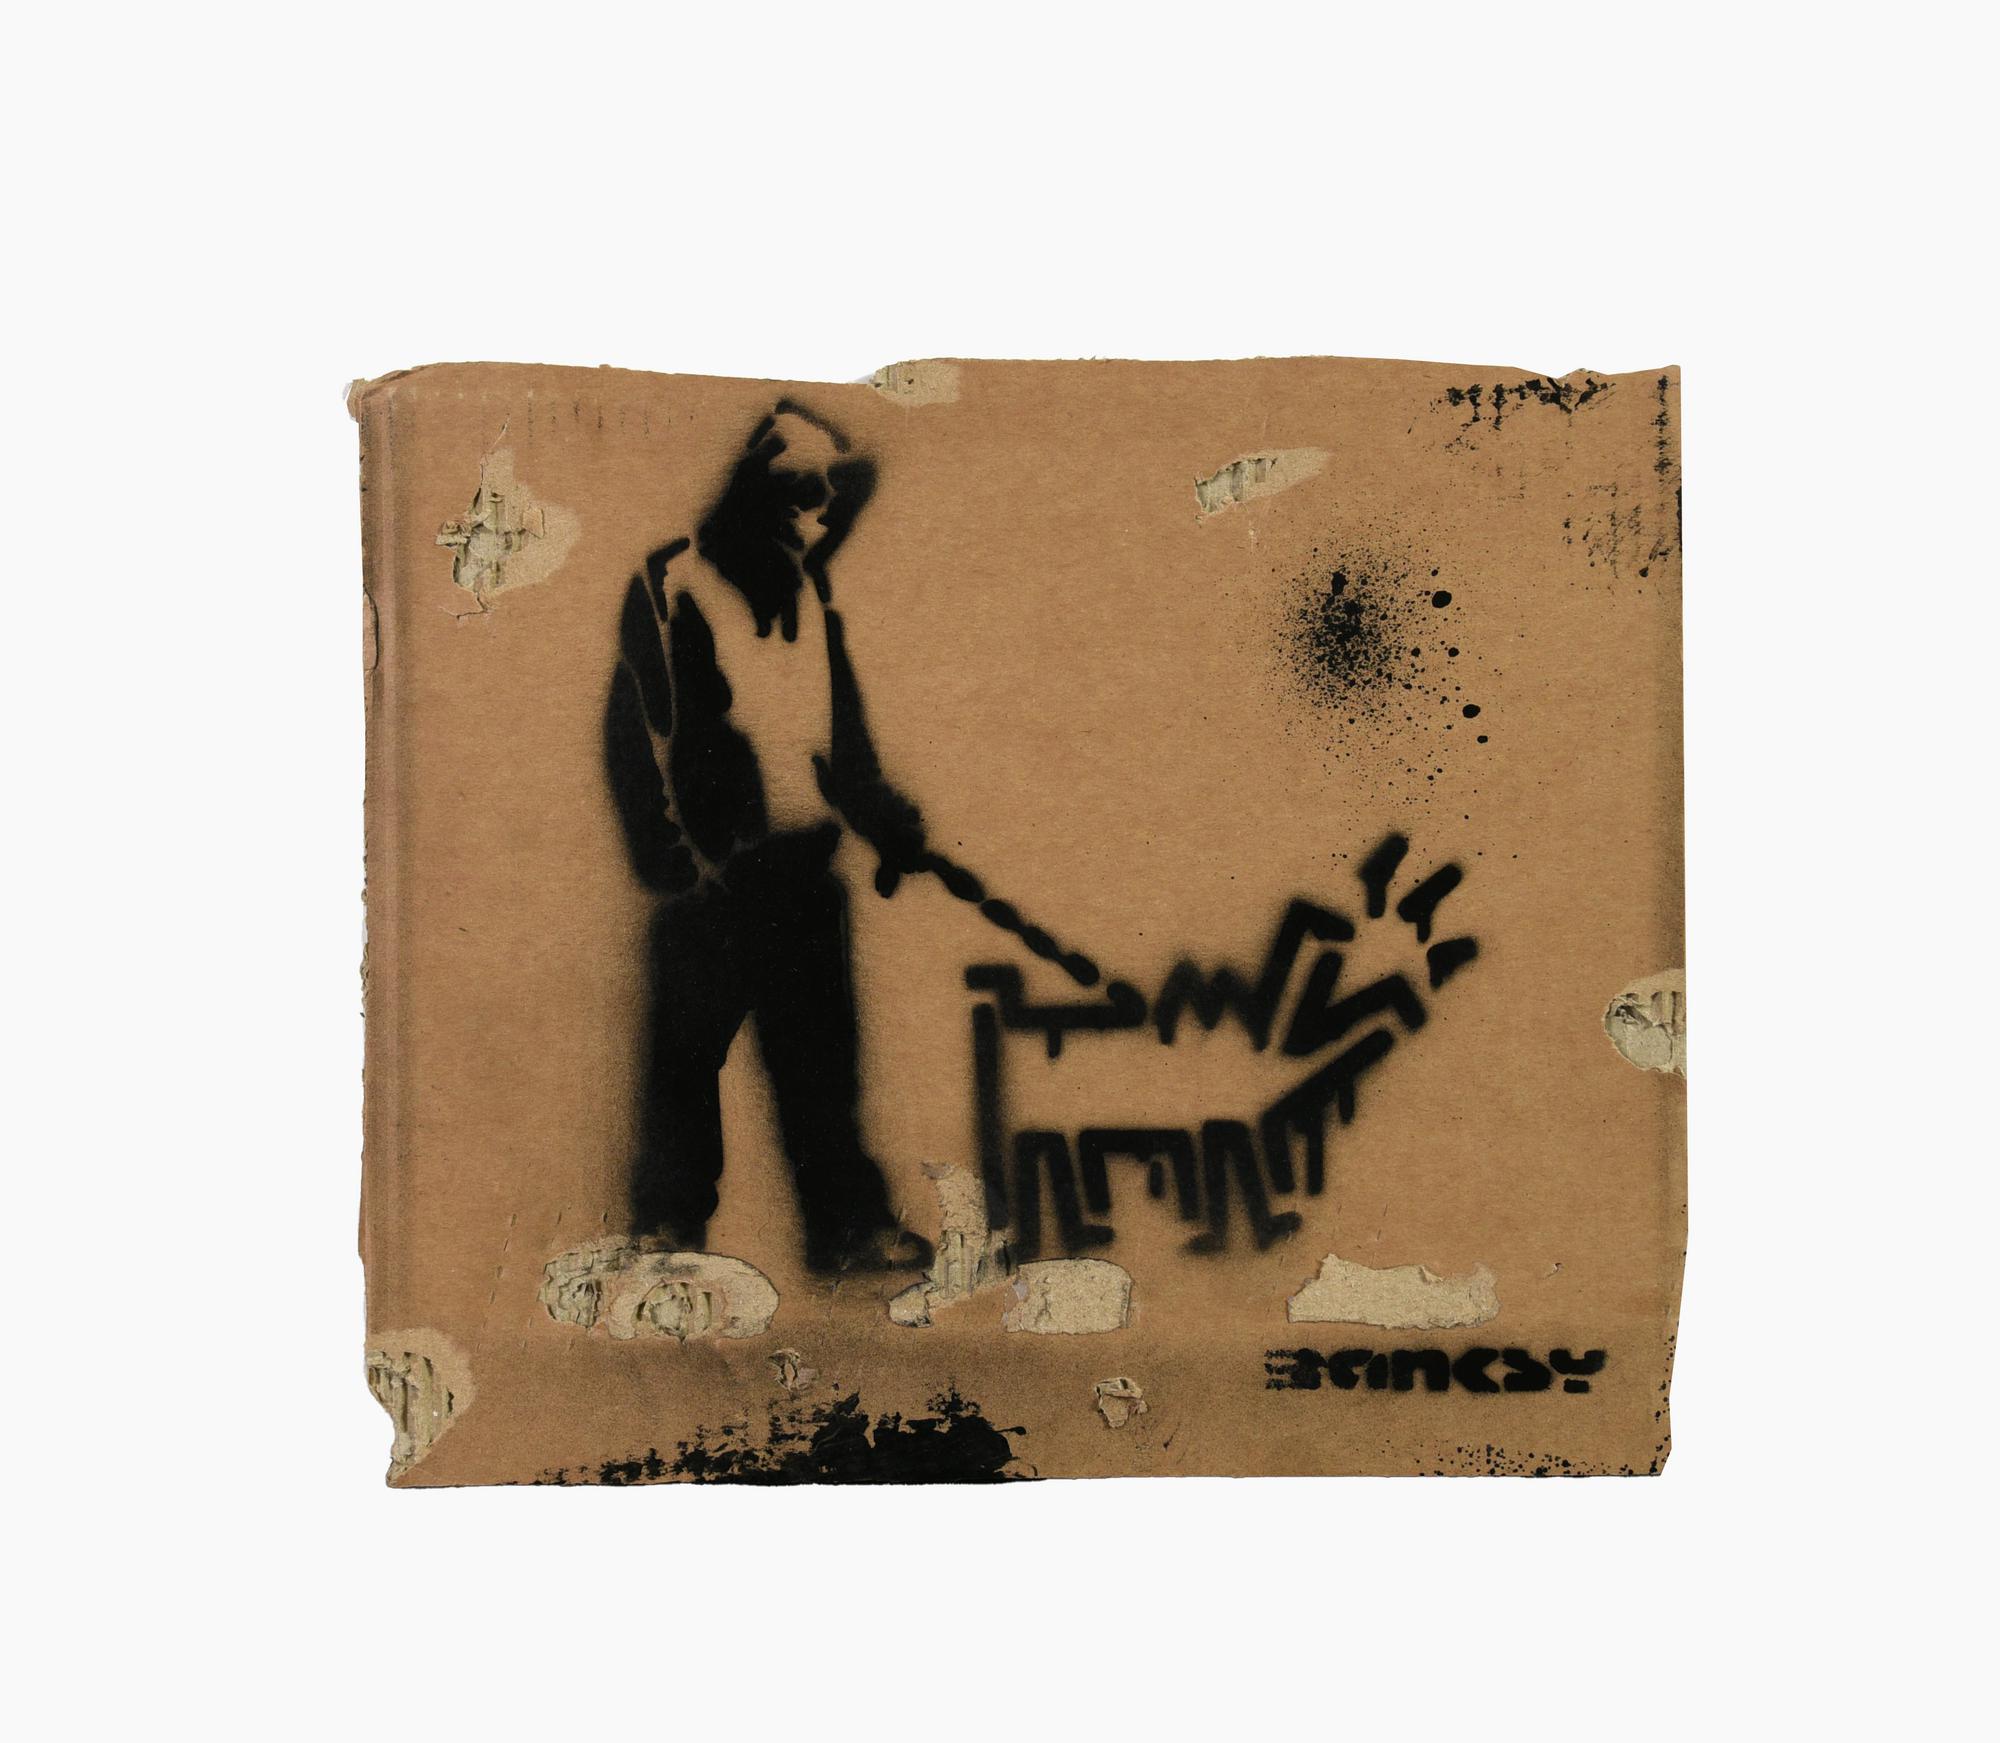 Banksy BARKING DOG (HARING) sprayed stencil graffiti su cartone, cm 25,5x30,5...